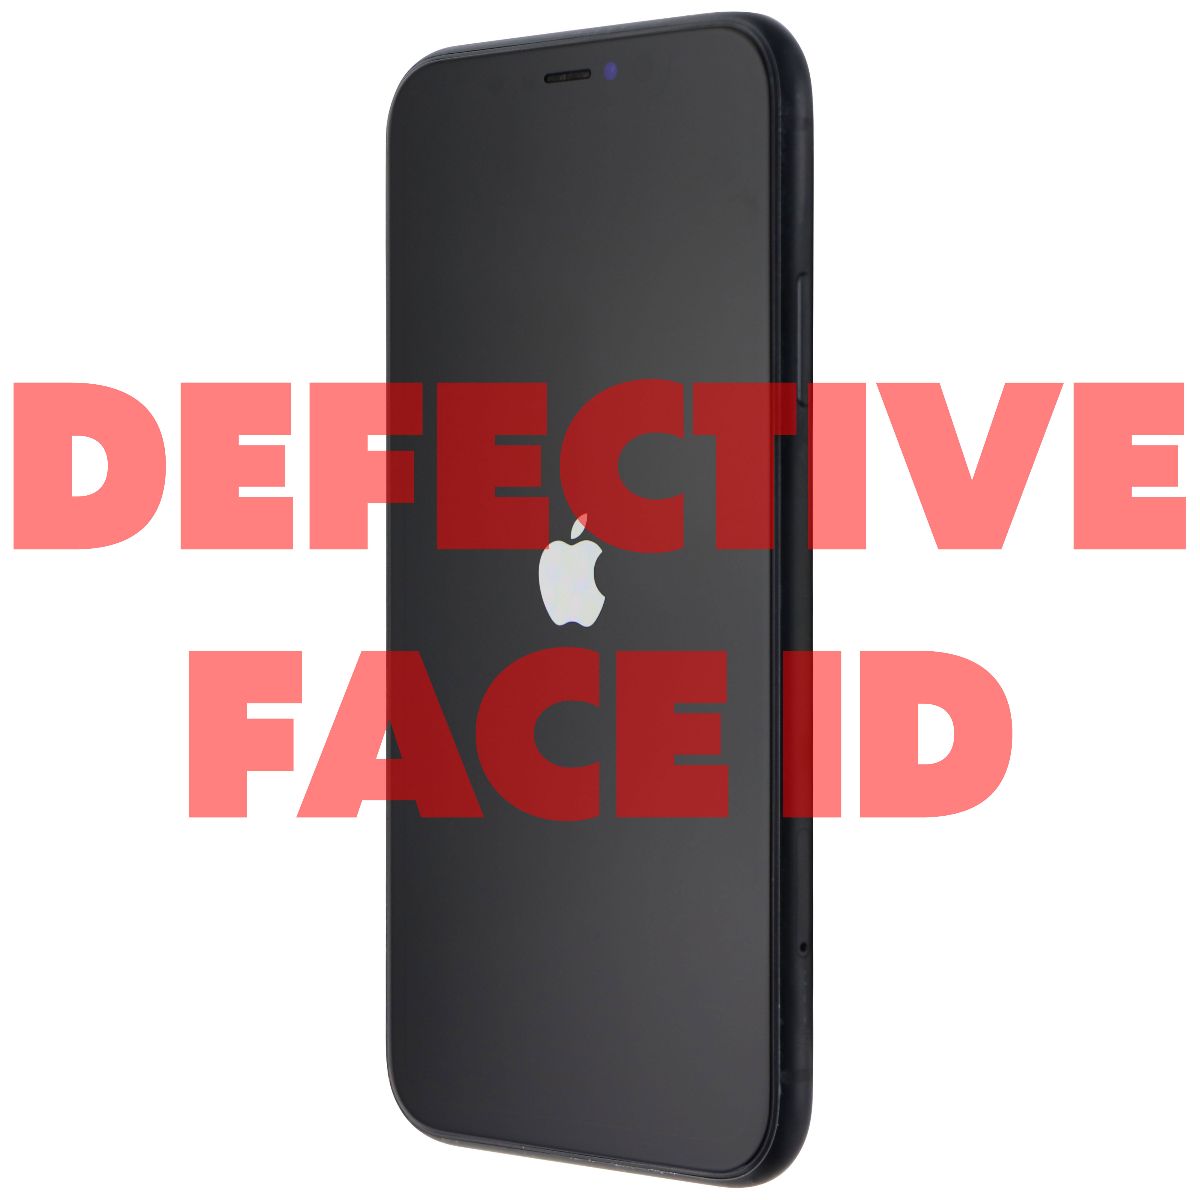 Apple iPhone XR (6.1-inch) (A1984) Unlocked - 64GB / Black - Bad Face ID*